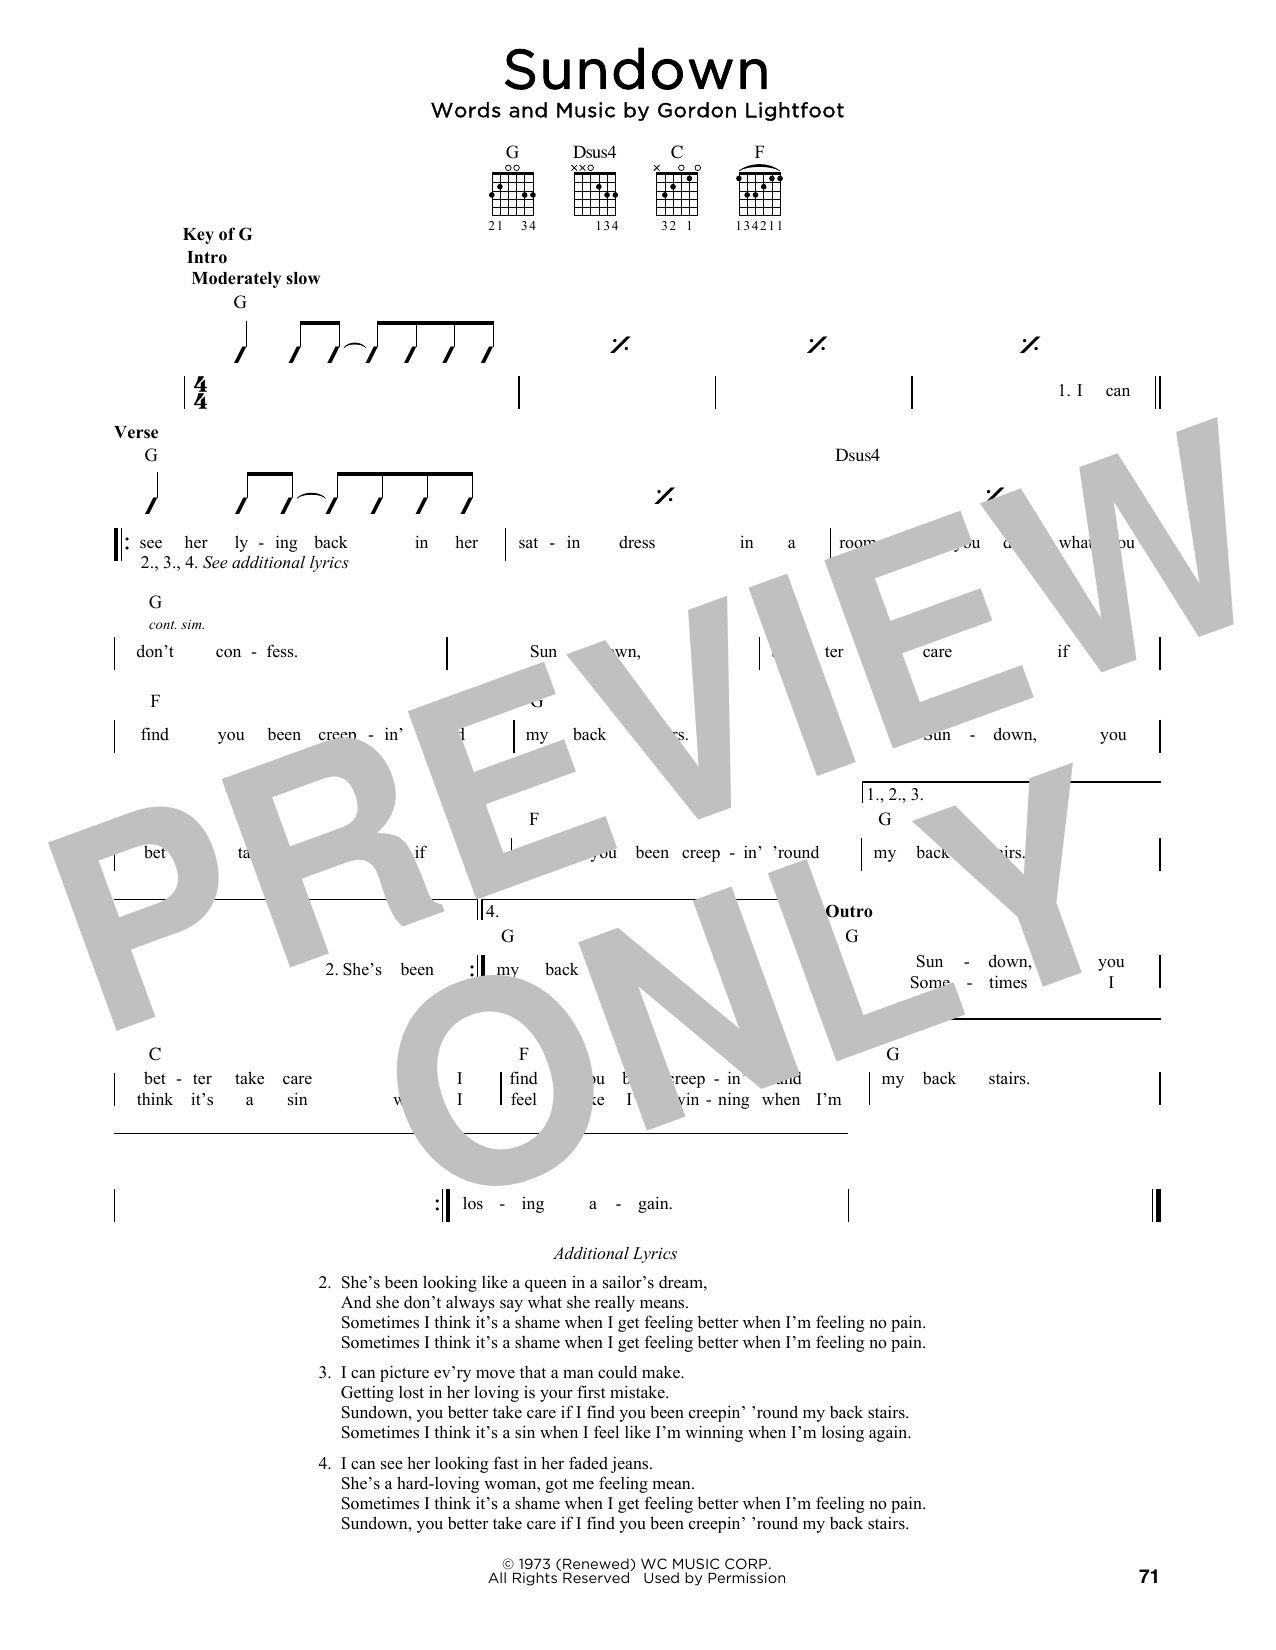 Gordon Lightfoot Sundown Sheet Music Notes & Chords for Guitar Lead Sheet - Download or Print PDF